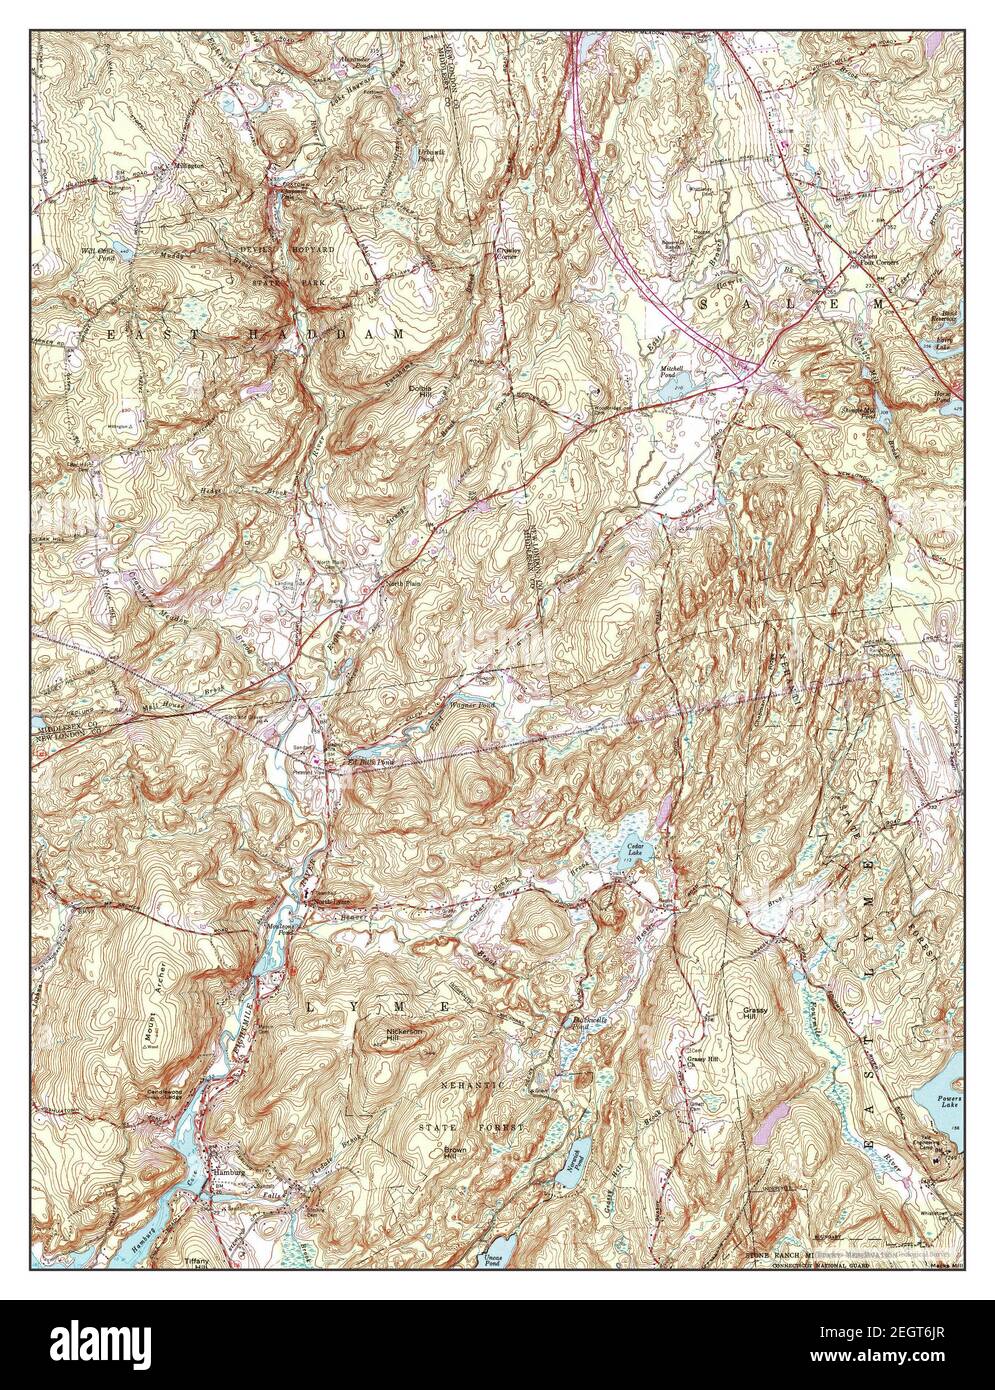 Hamburg, Connecticut, map 1961, 1:24000, United States of America by Timeless Maps, data U.S. Geological Survey Stock Photo